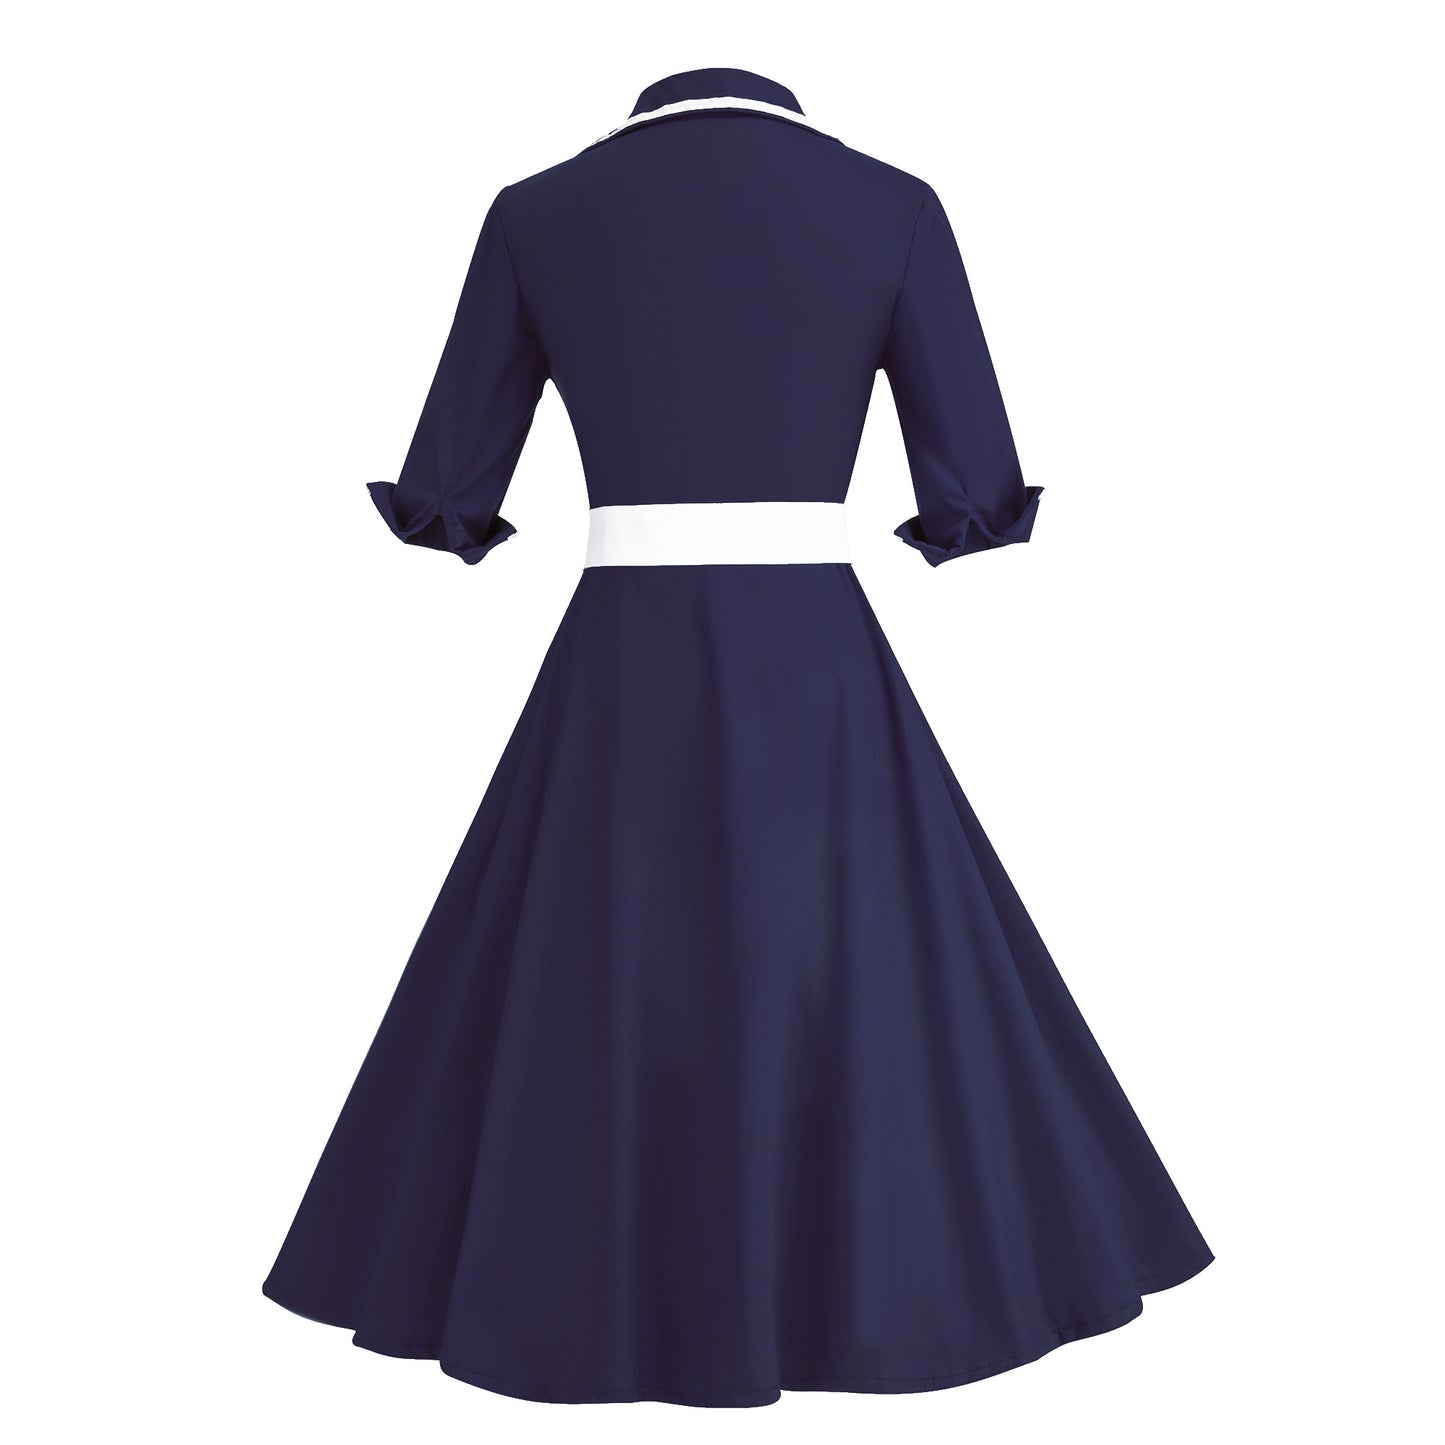 Yieks Womens 50s Nautical Sailor Dress